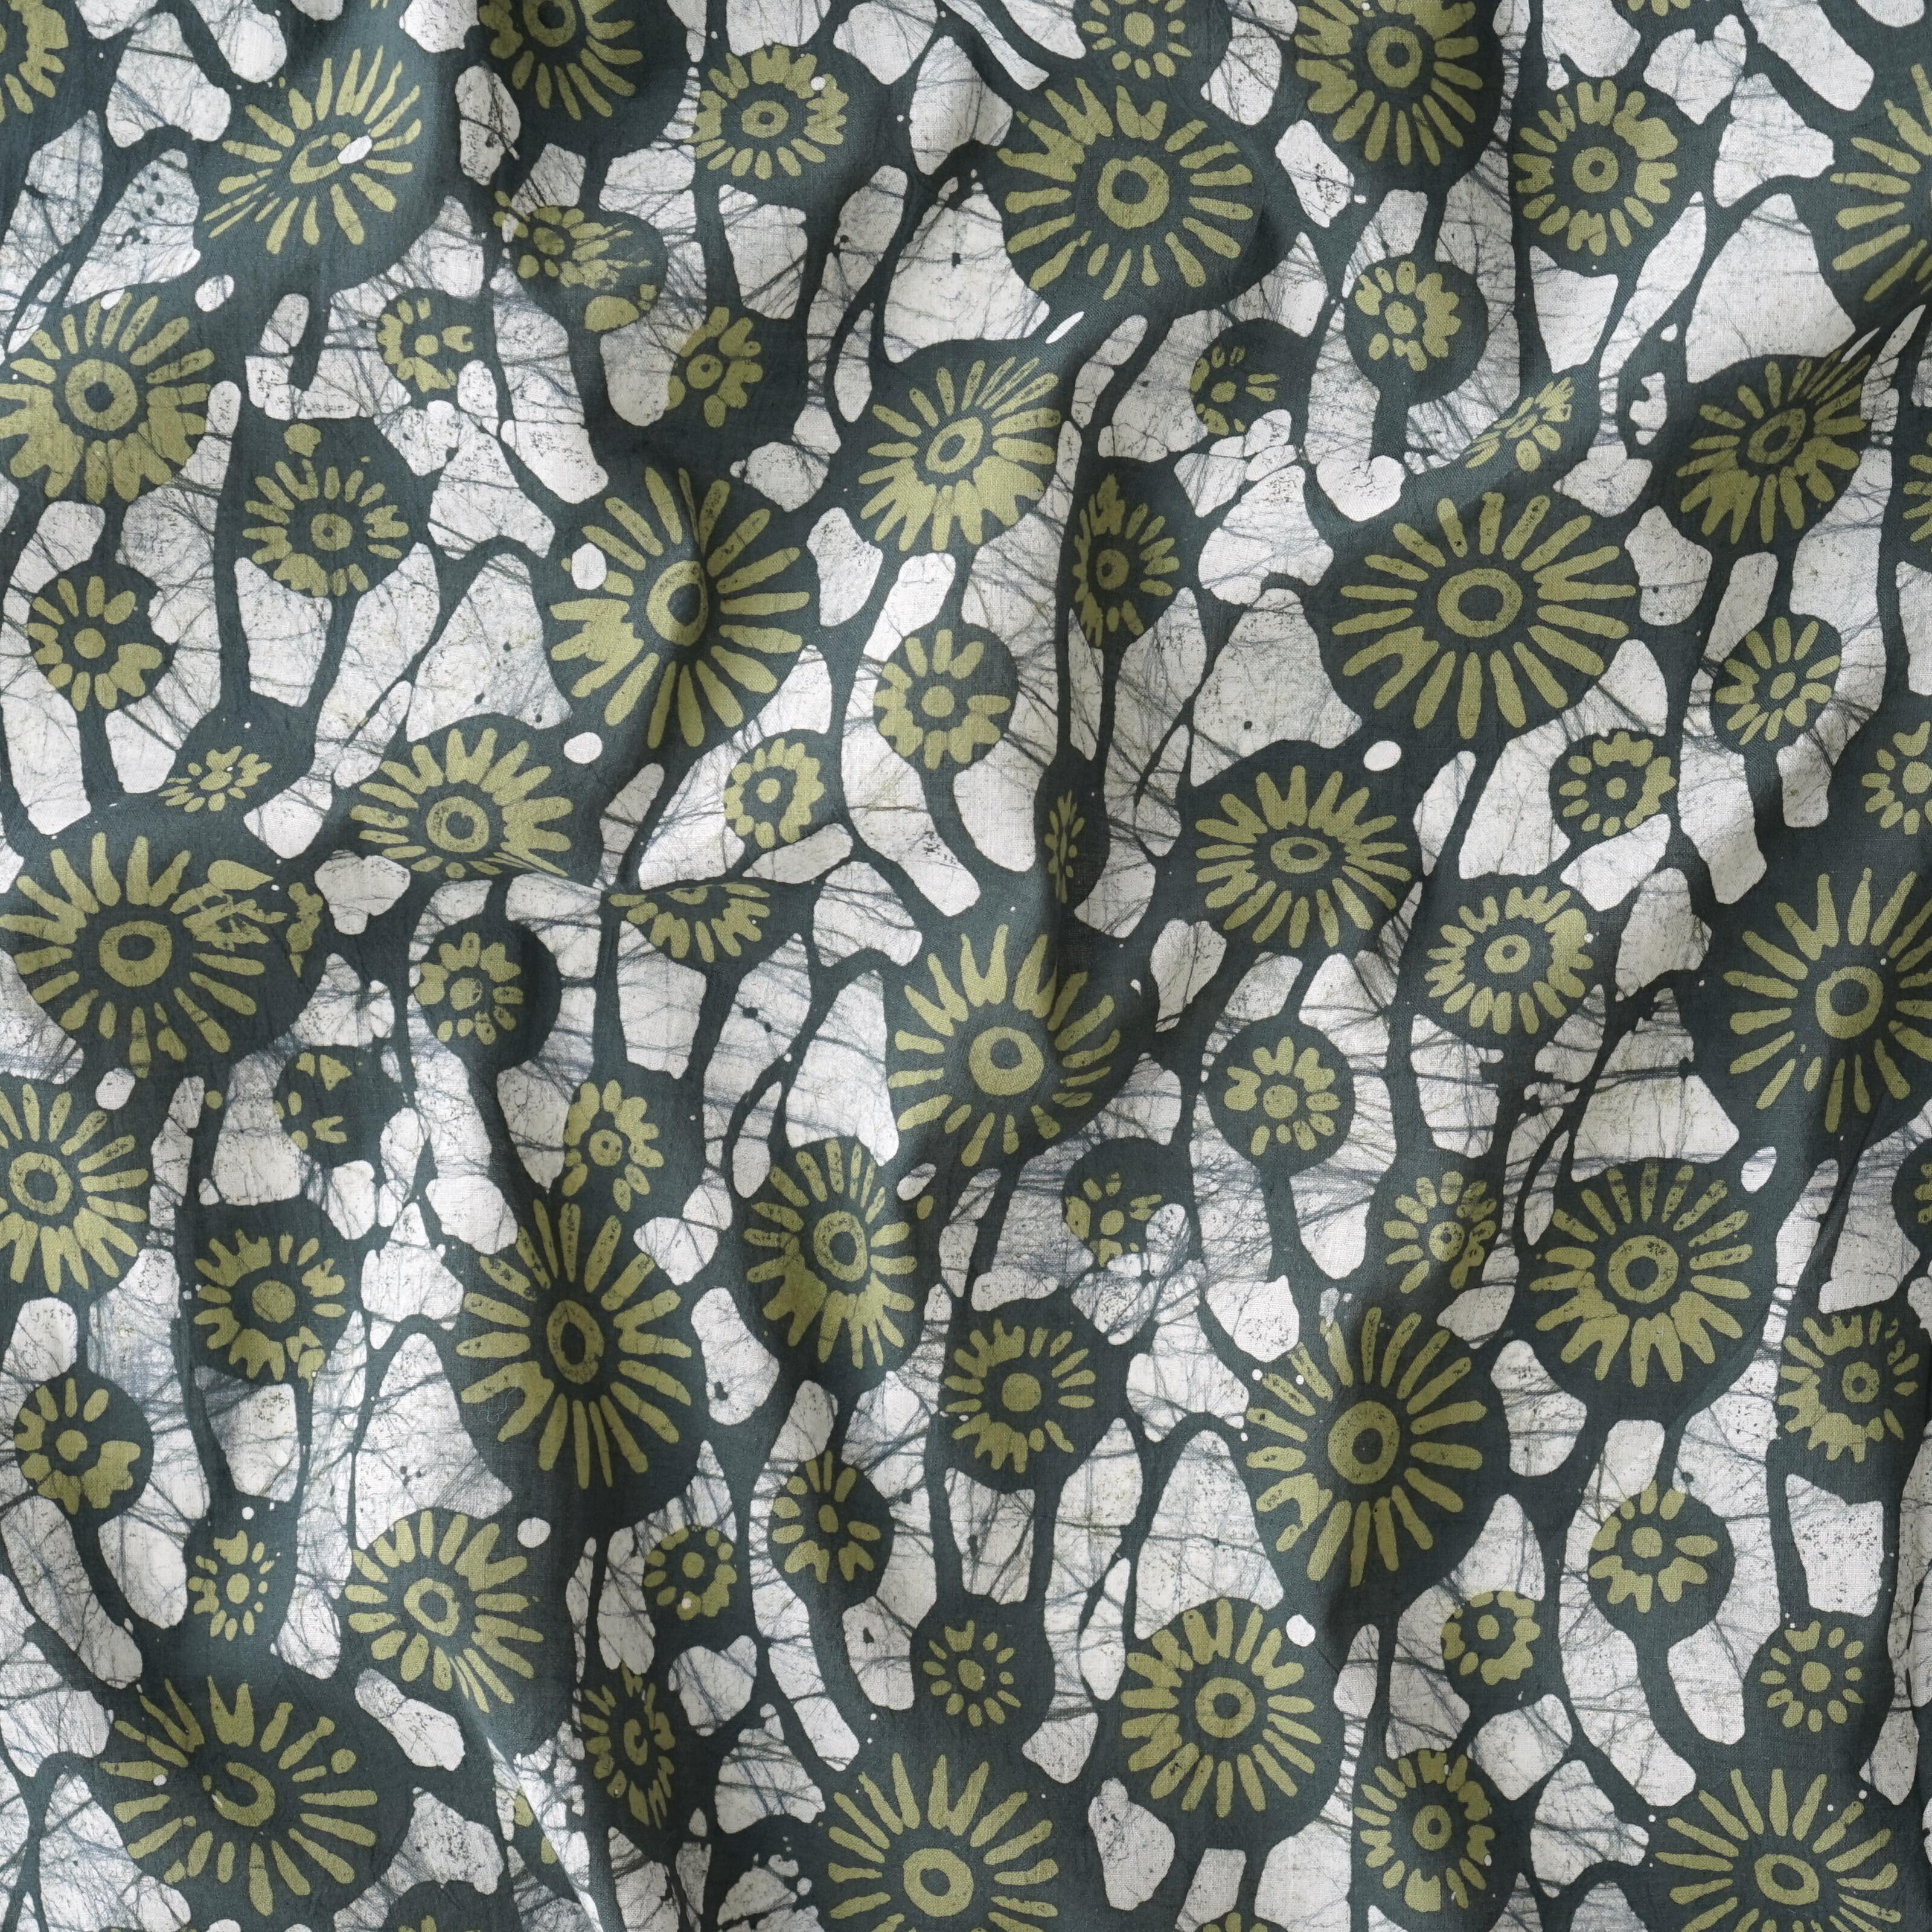 Block-Printed Batik Fabric - Cotton Cloth - Reactive Dyes - Choicest Moss Design - Contrast